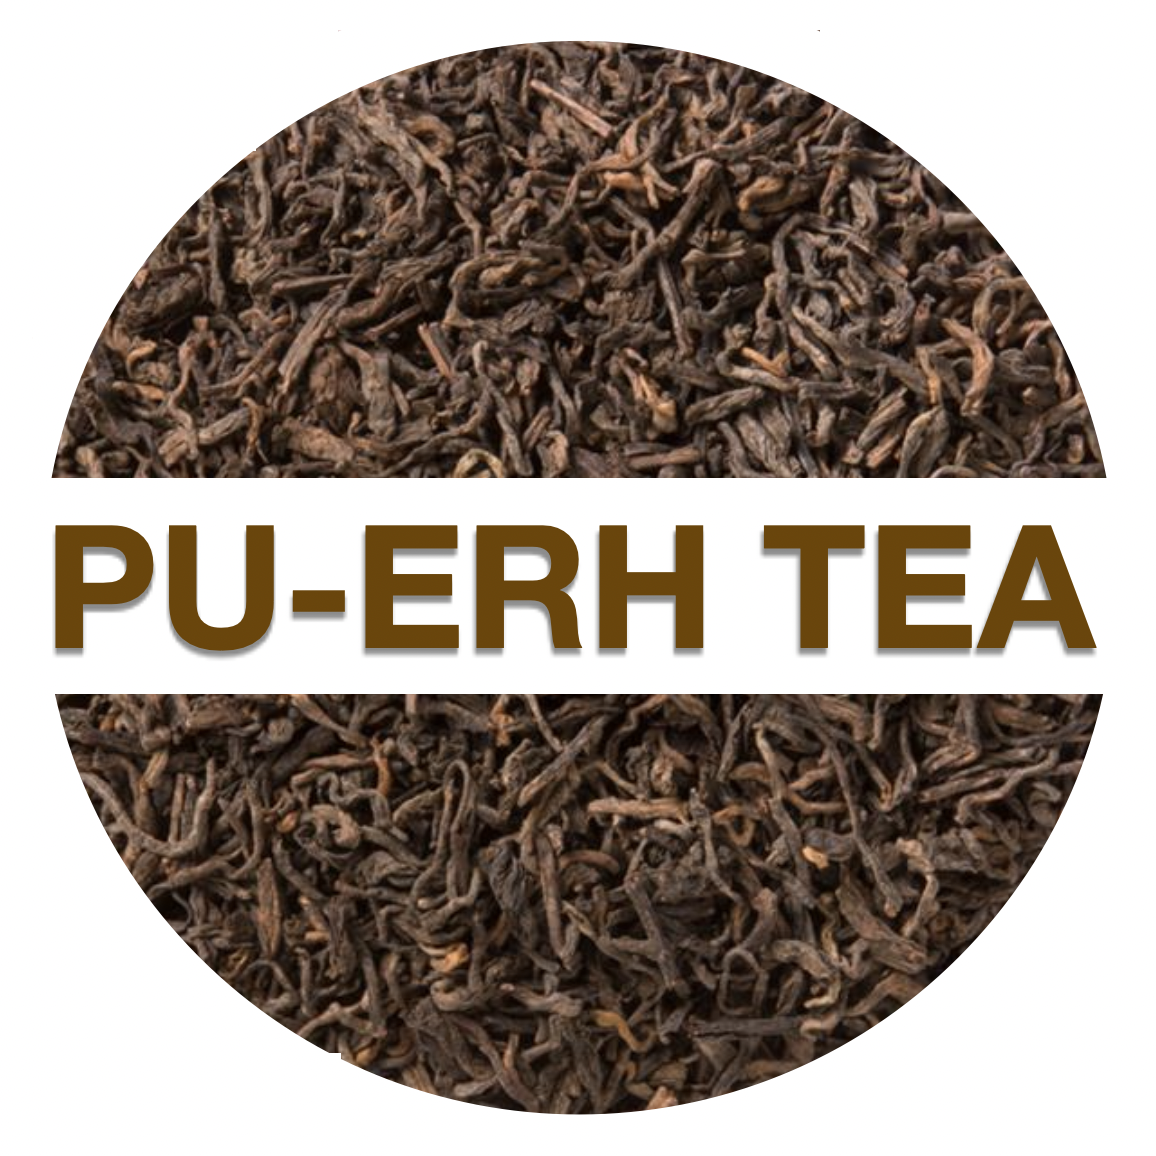 pu-erh tea benefits